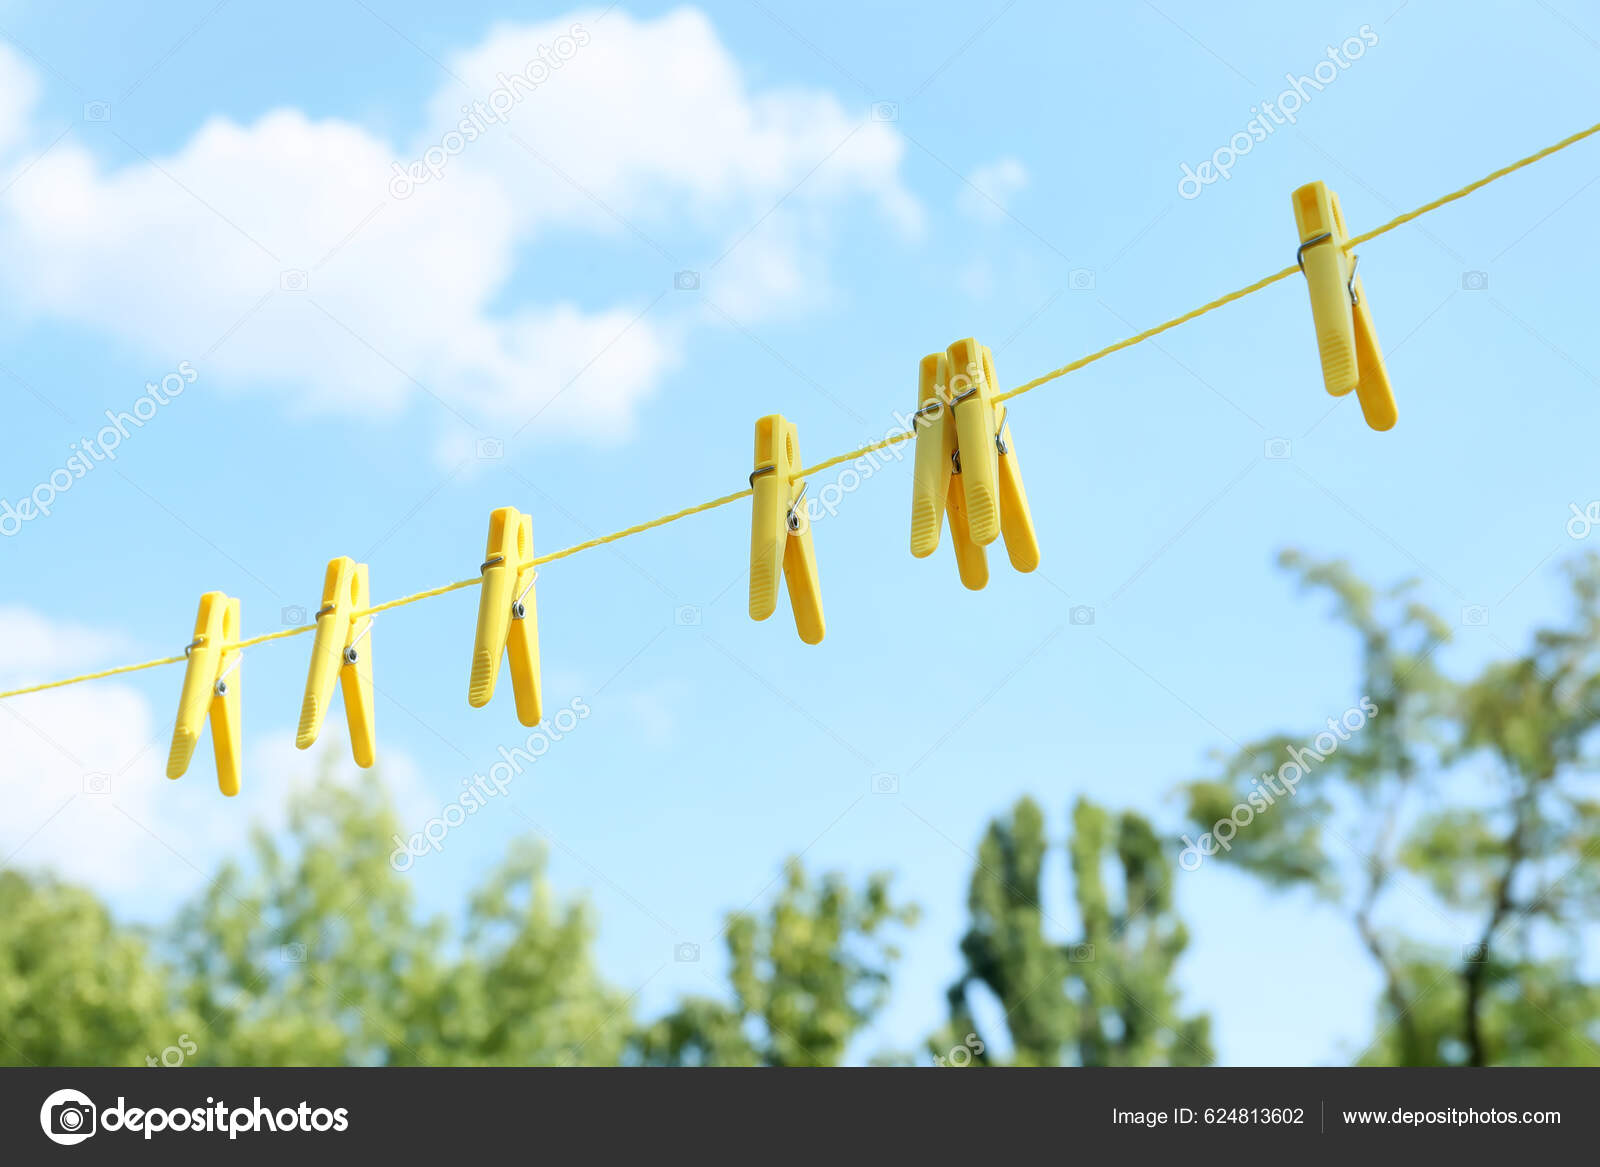 Clothespins Clothespins, Clothespins Laundry, Clothes Pegs, Photo String